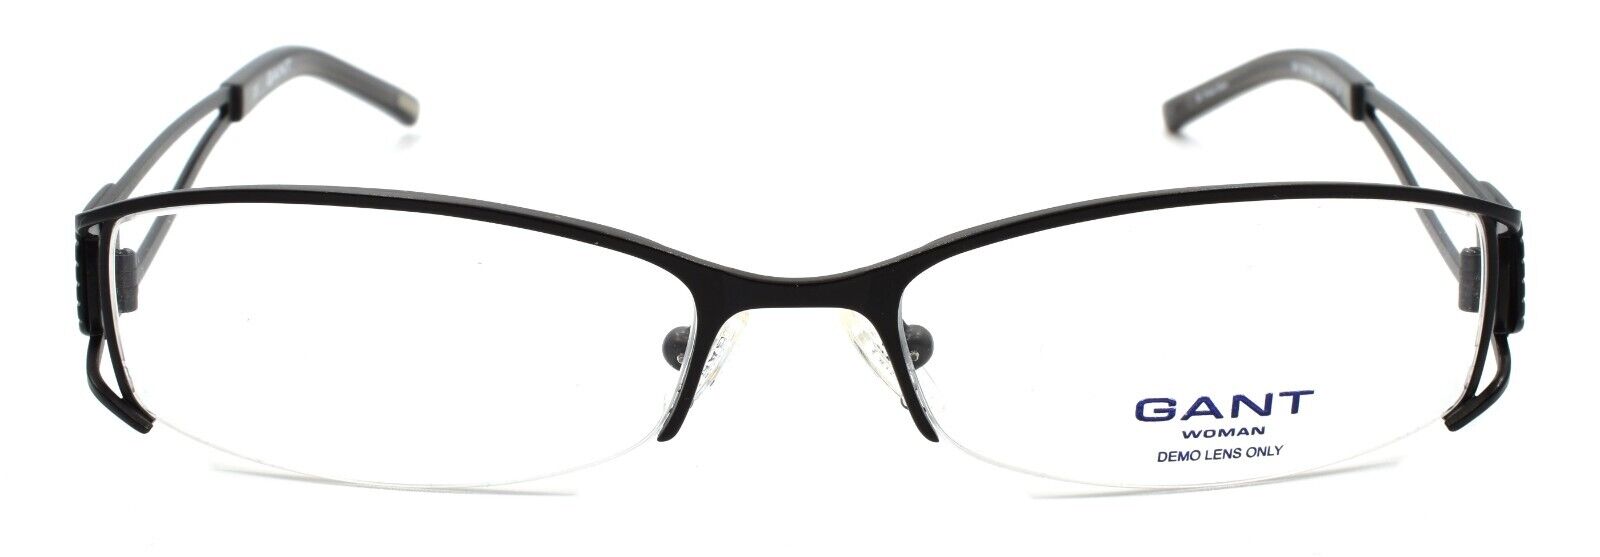 2-GANT GW Sienna SBLK Women's Eyeglasses Frames Half-rim 53-17-135 Satin Black-715583186330-IKSpecs